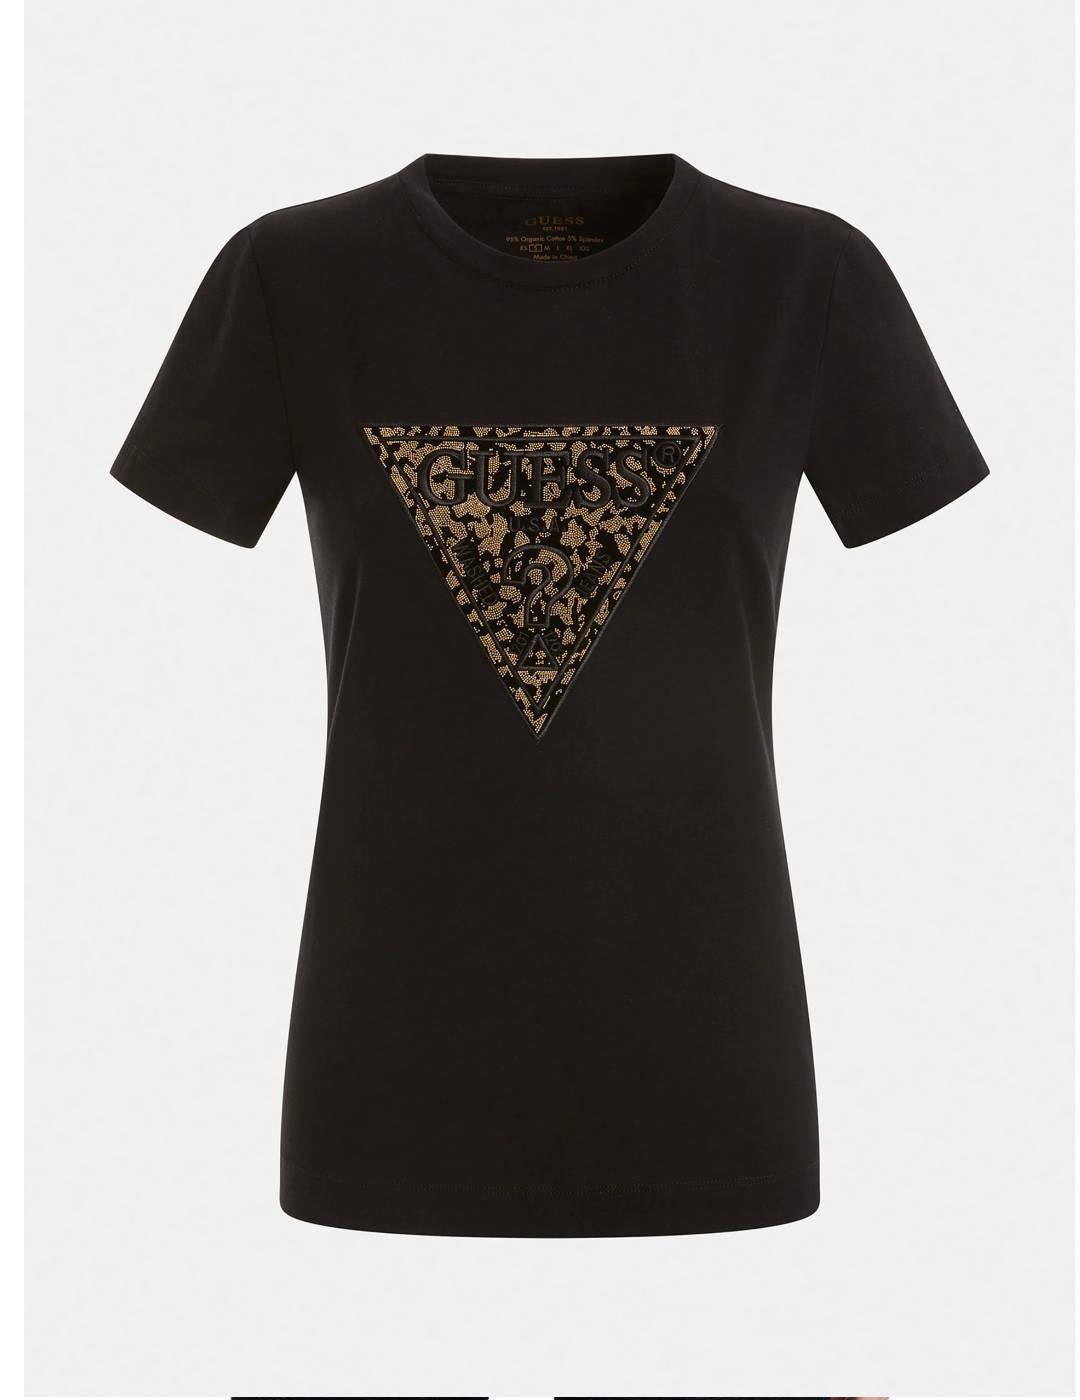 Camiseta Guess Lidia negro y dorado para mujer-b